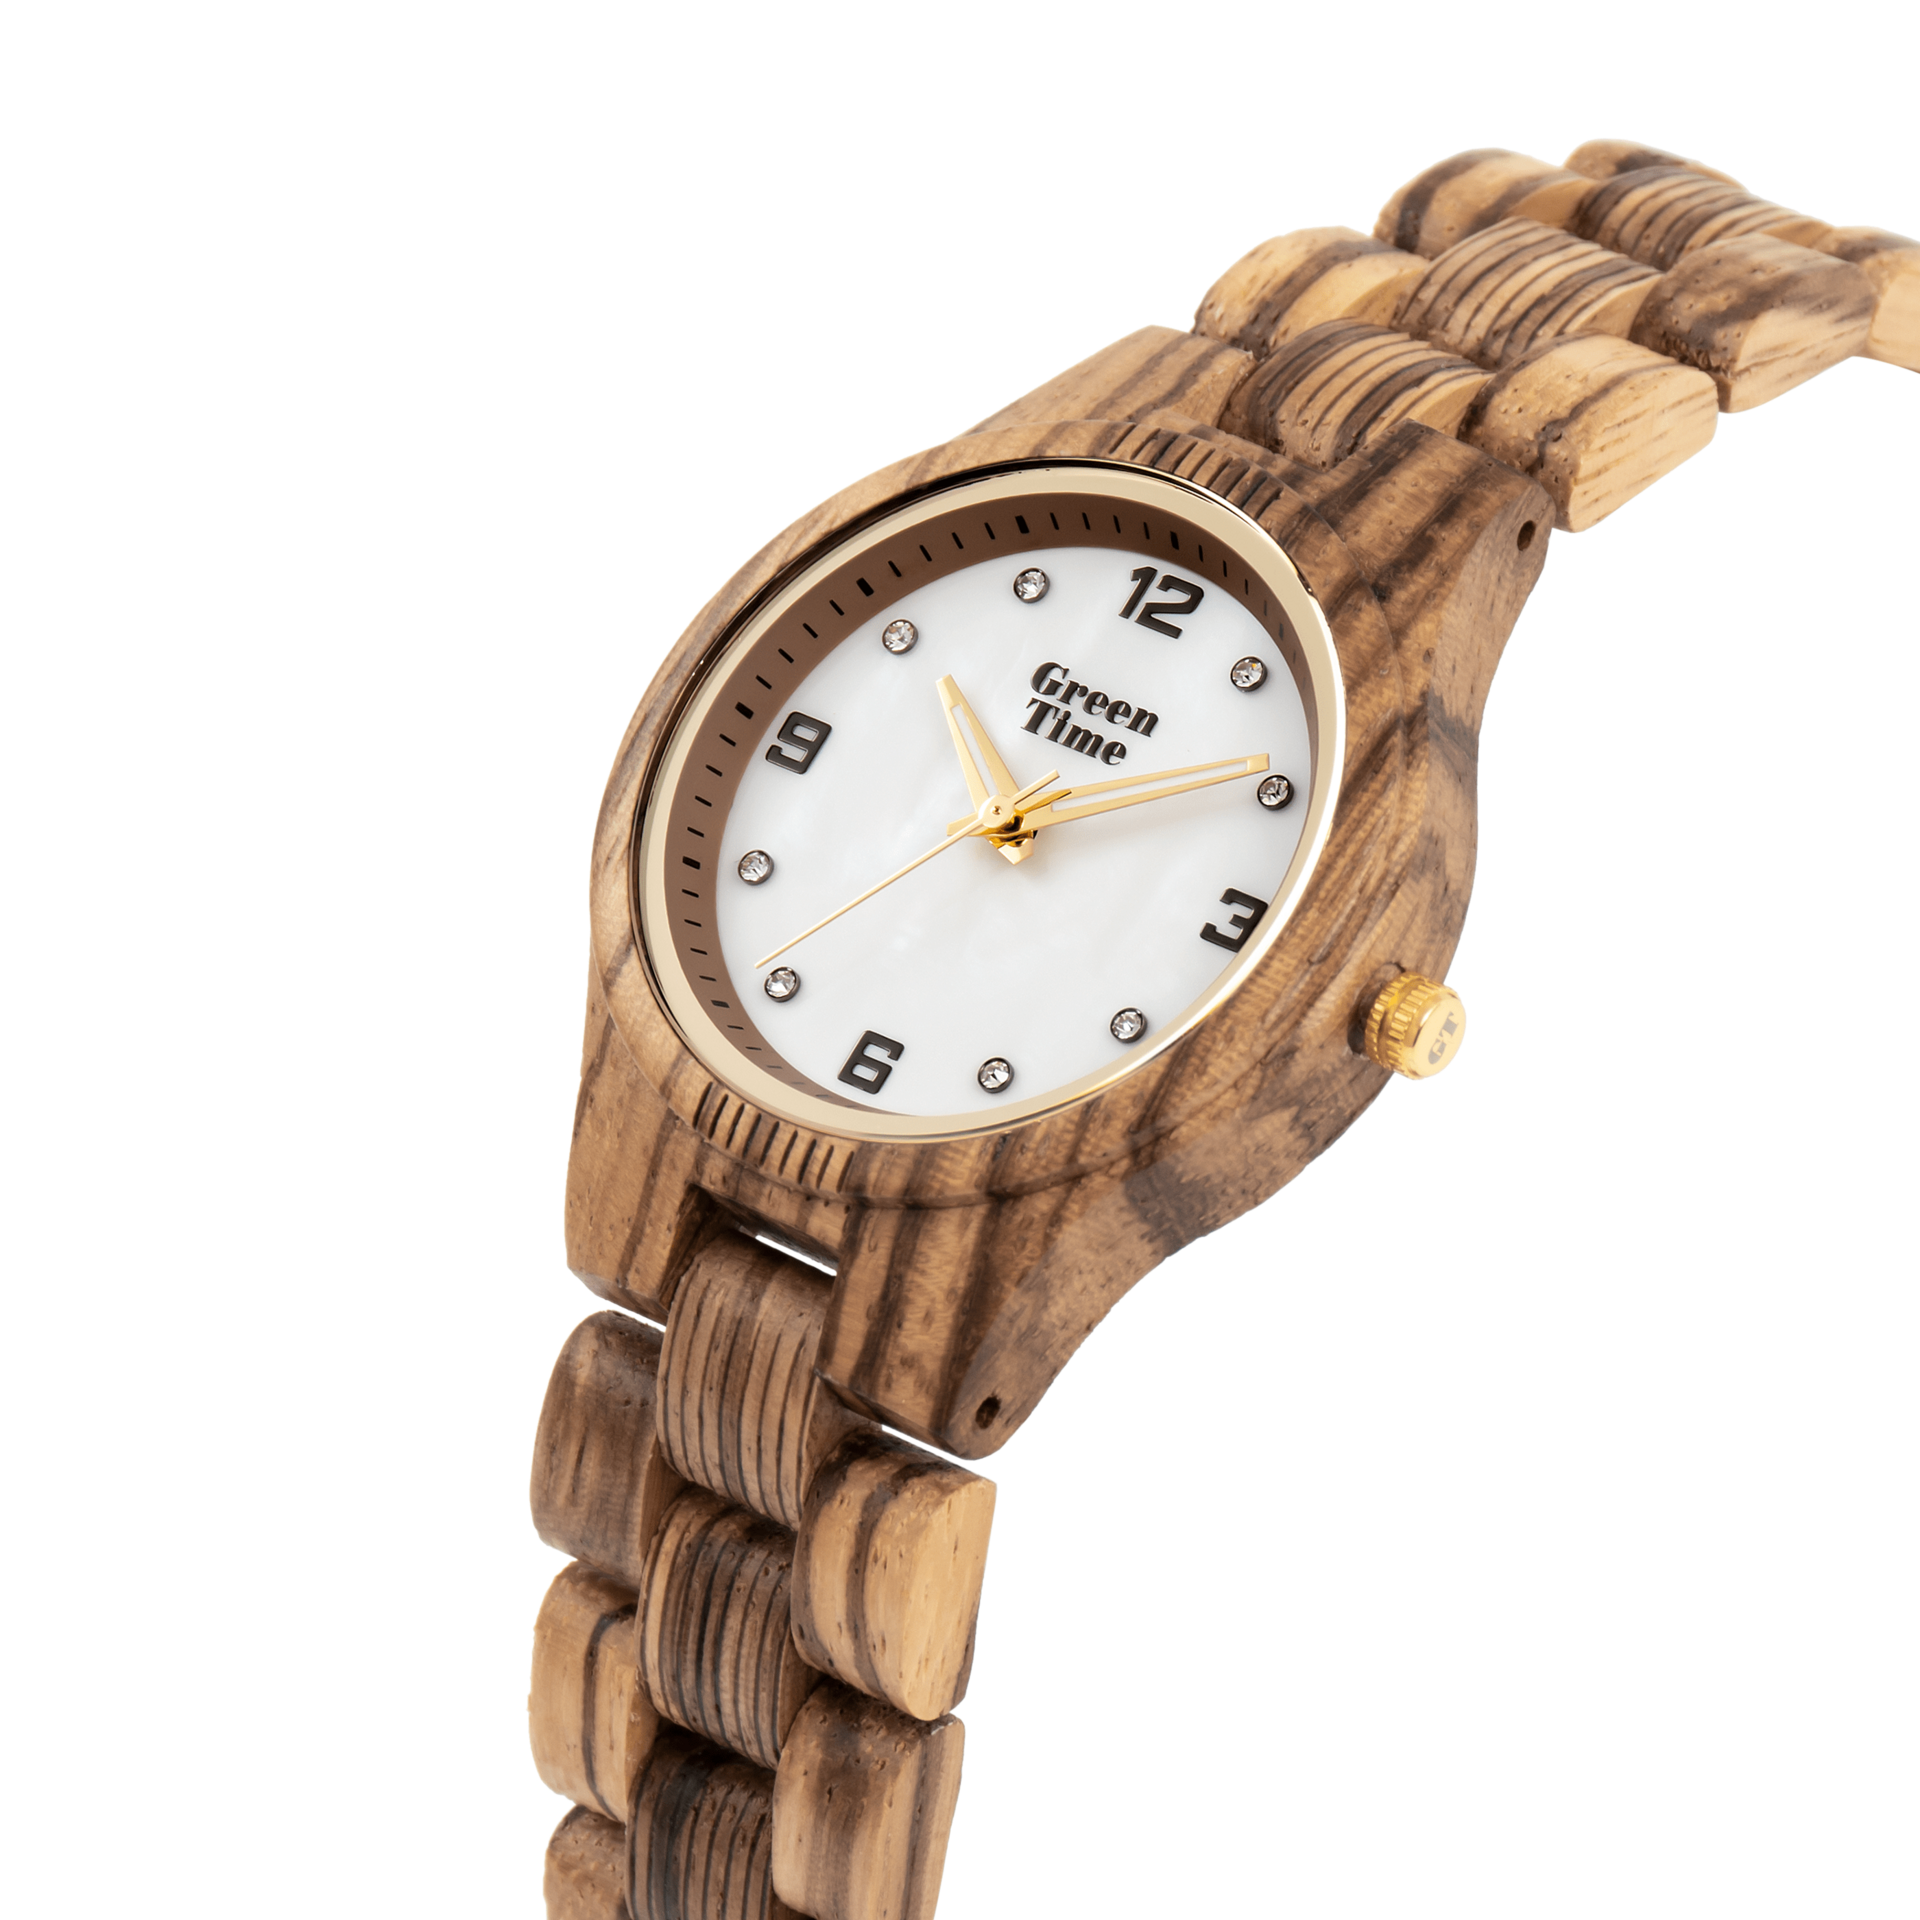 GreenTime - Wooden wood watch Greentime watch